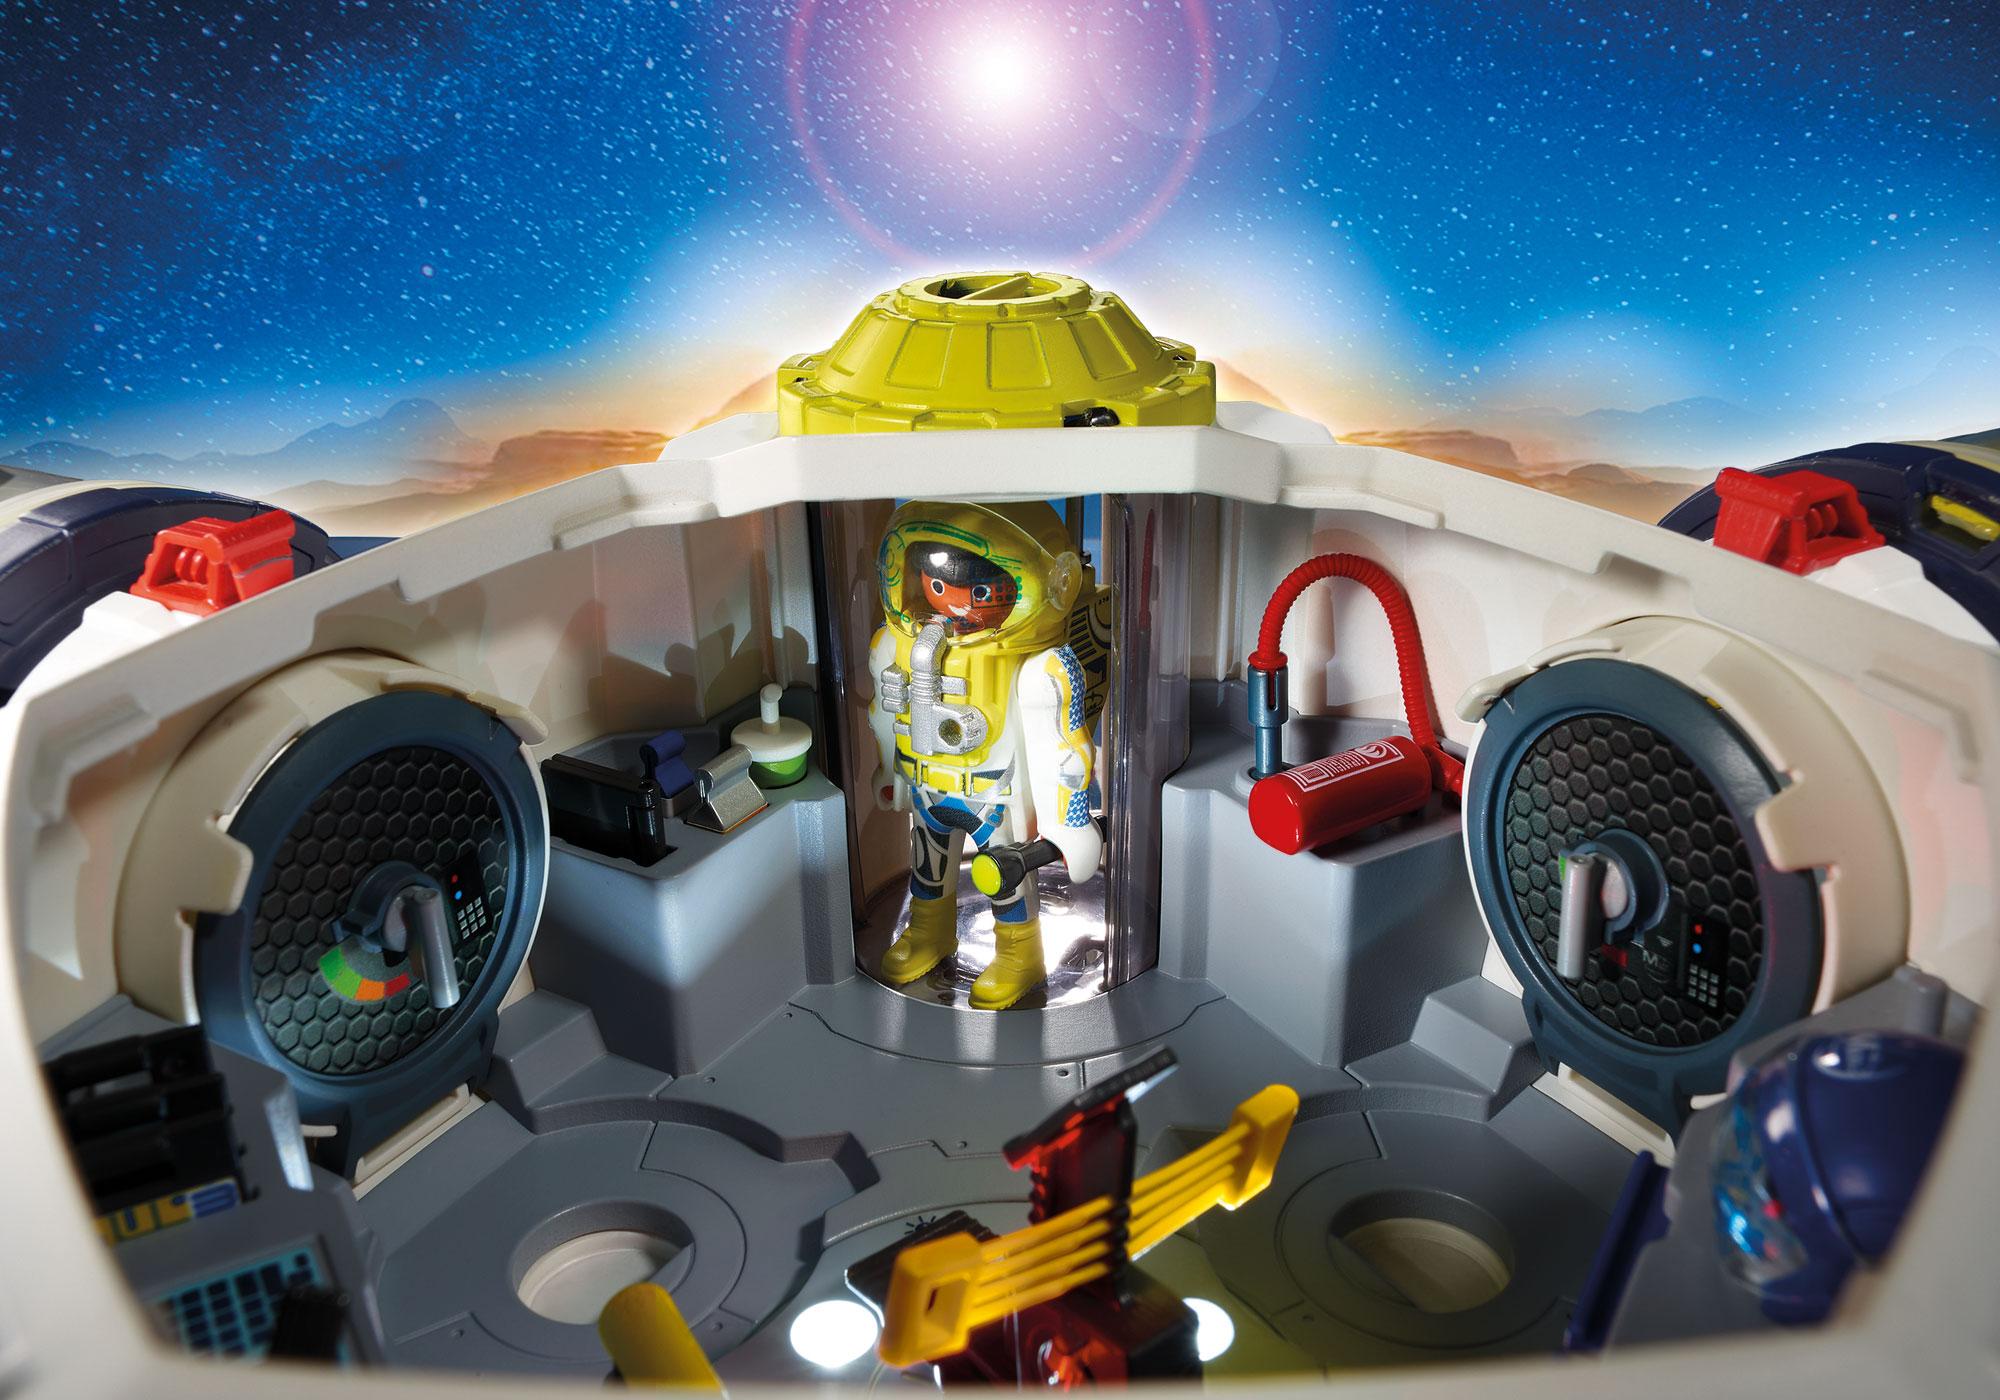 playmobil space set